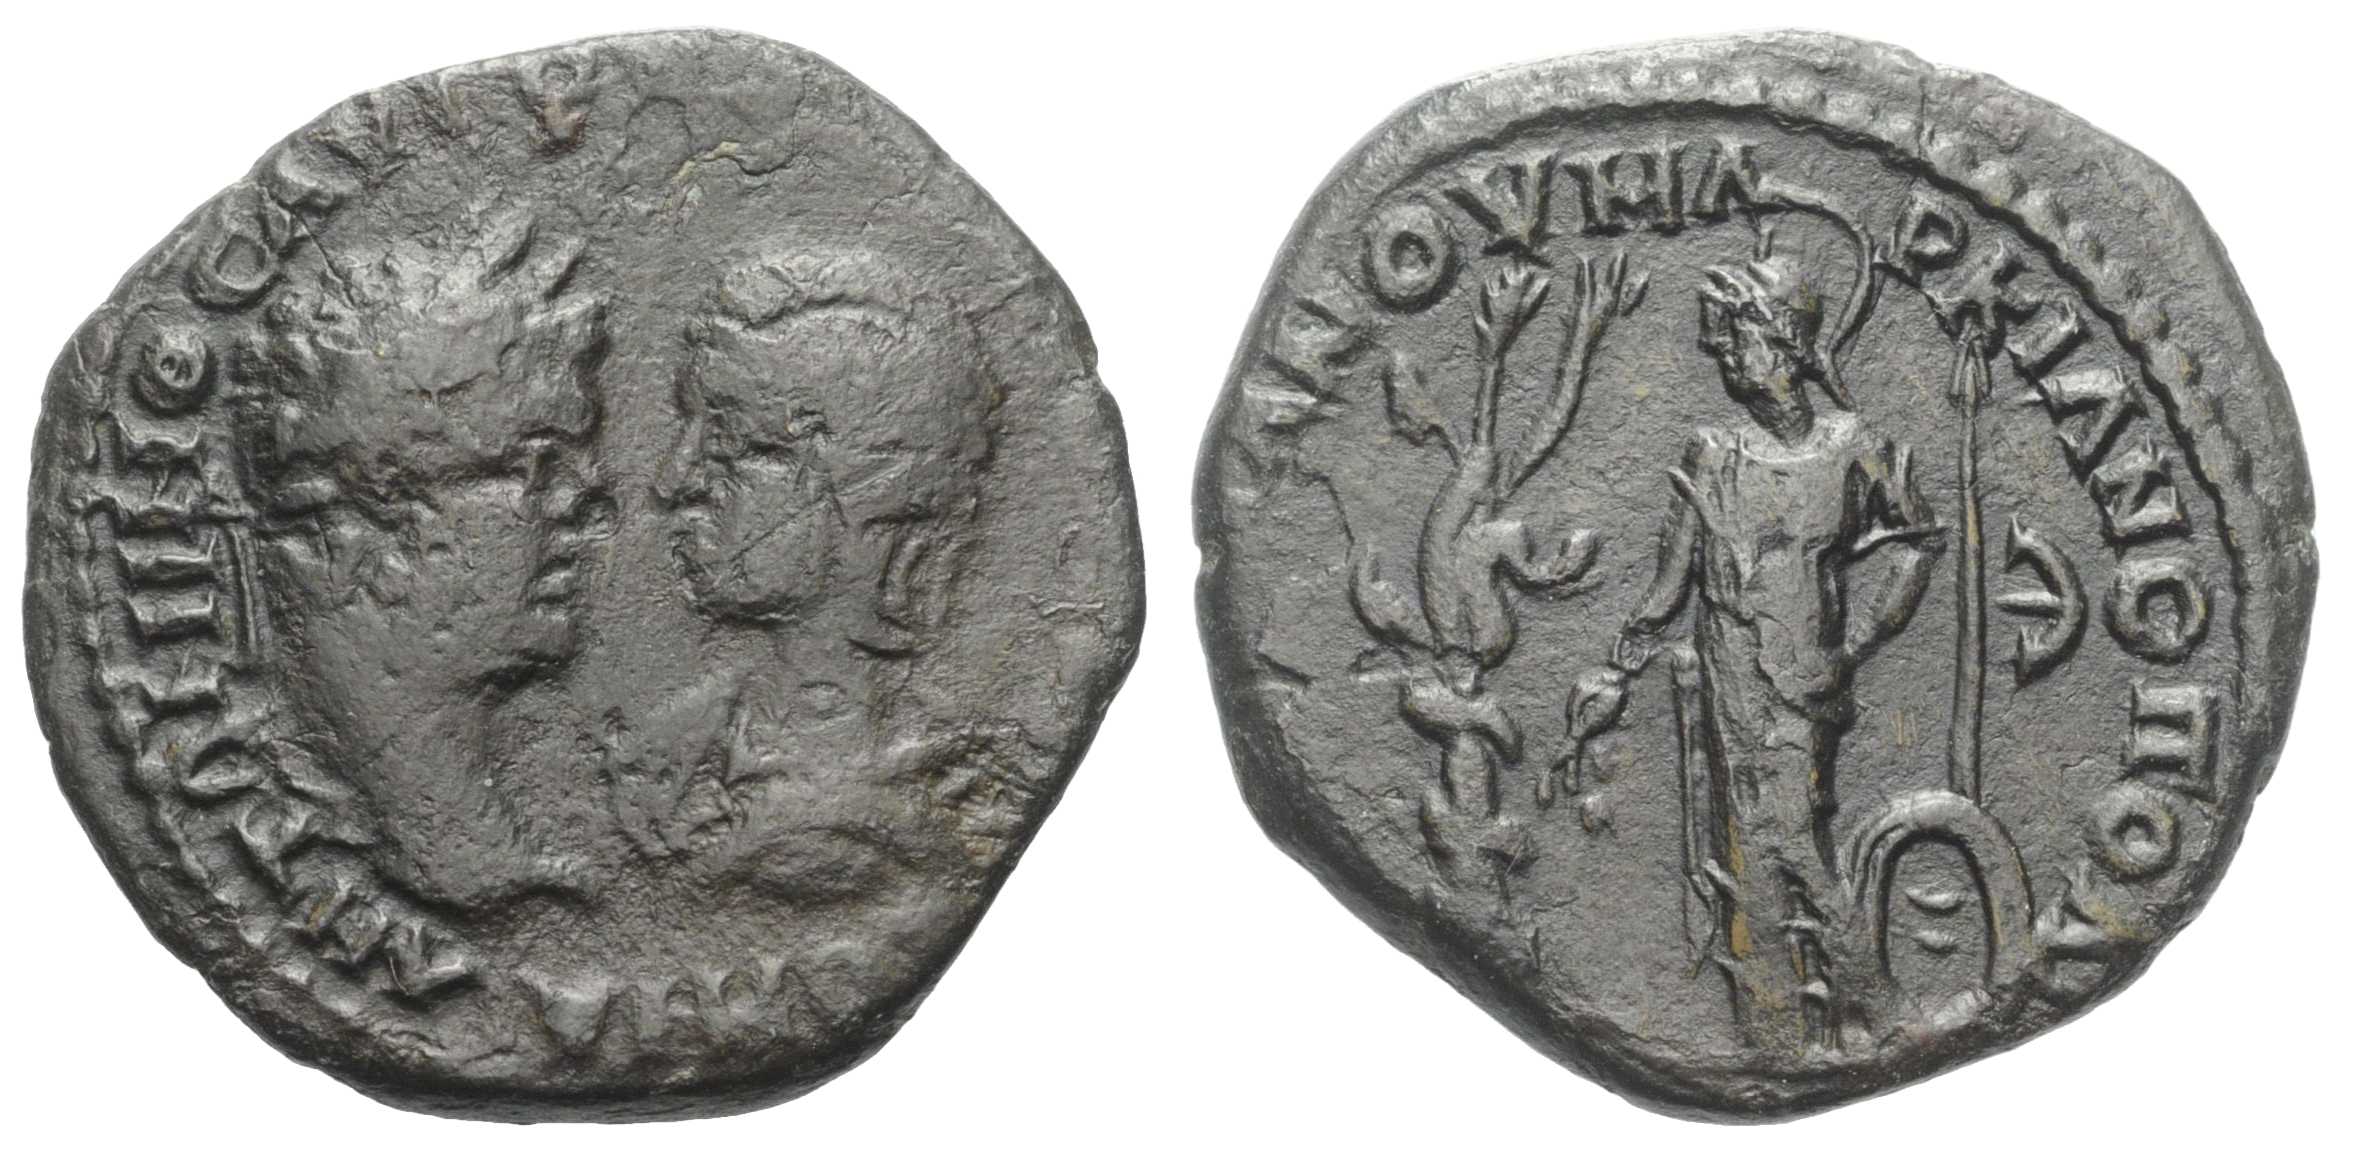 6765 Marcianopolis Moesia Inferior Caracalla & Iulia Domna AE